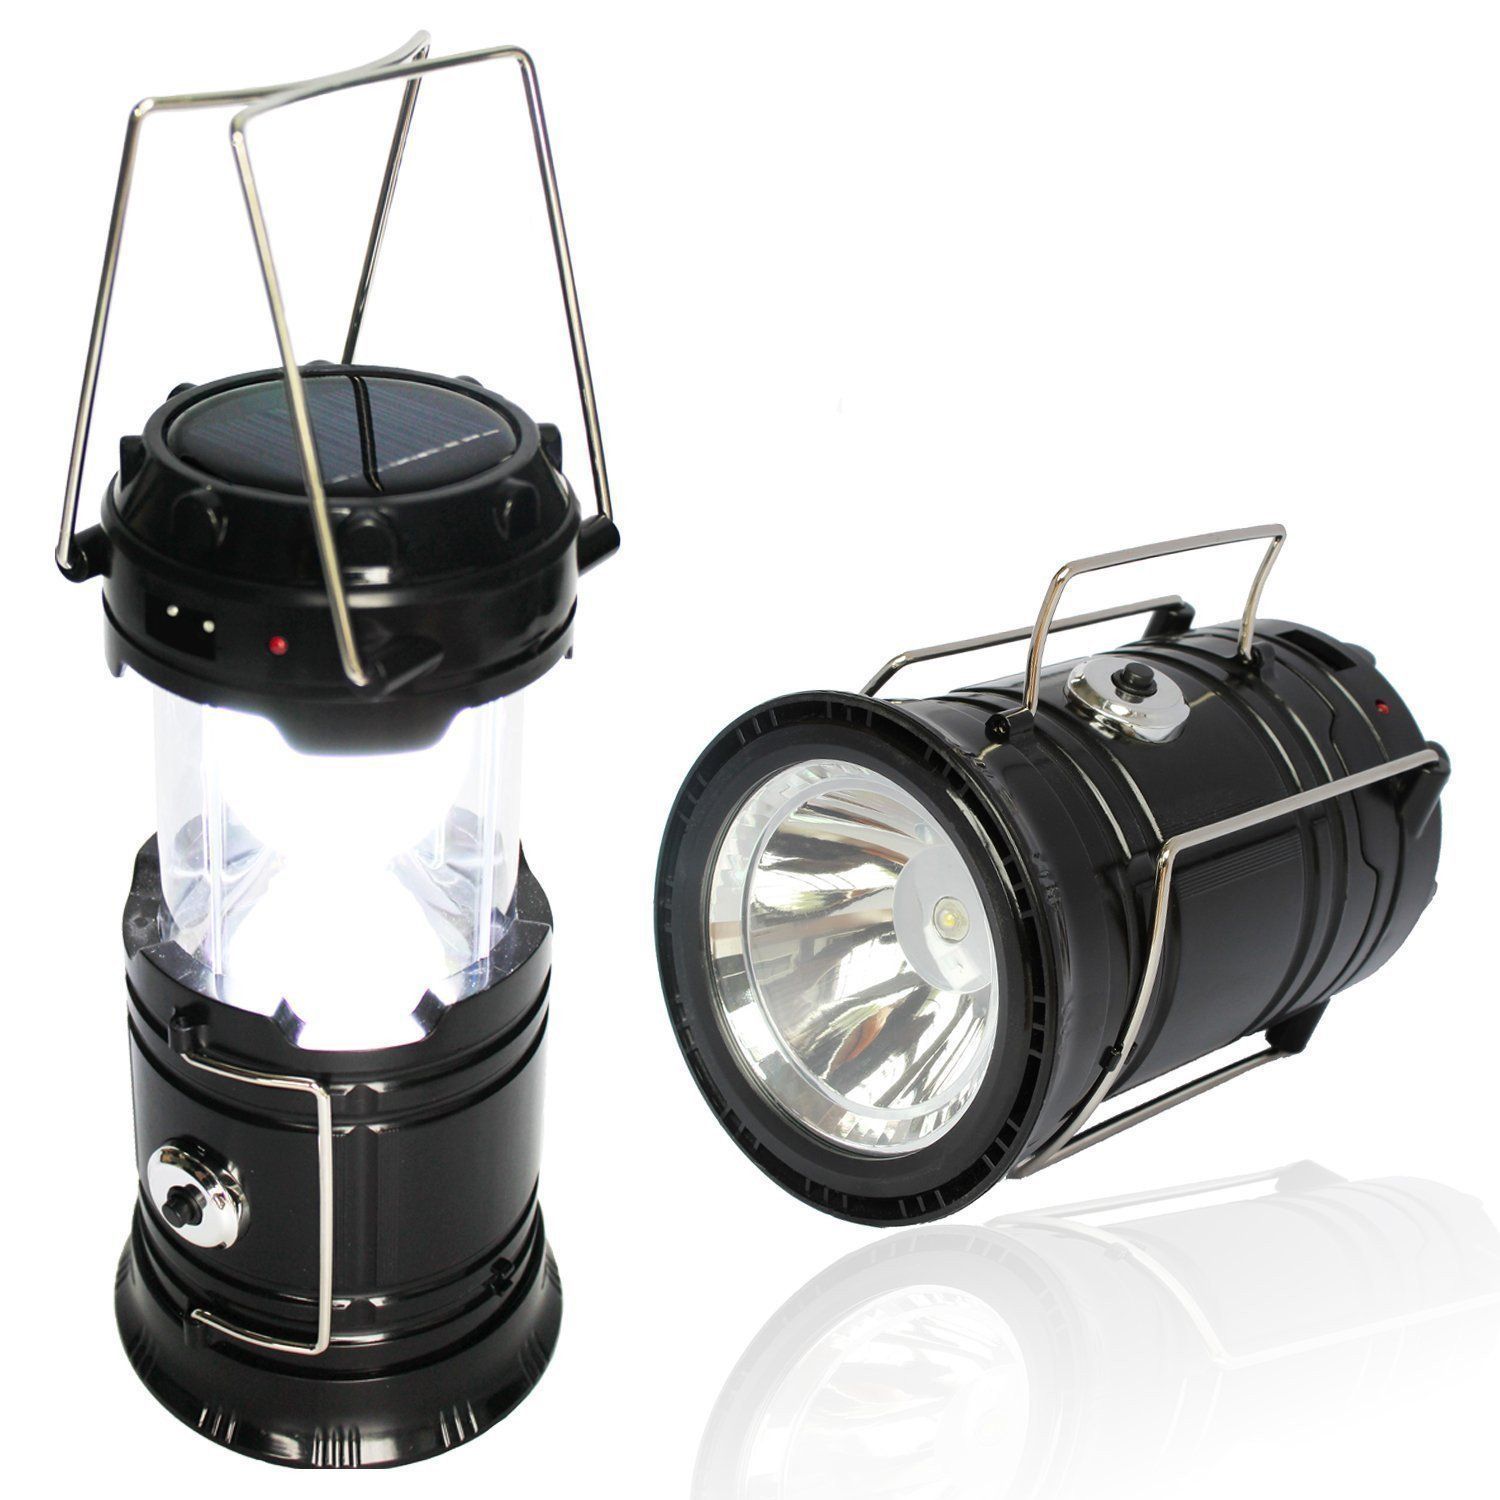 Купить фонари воронеж. Фонарь кемпинговый JH-5800t. Фонарь лампа JH-5800t. Rechargeable Camping Lantern sh-5800t. Фонарик лампа для кемпинга 5800 Солнечная (1w+6led) Solar Camping Light (sh-5800t).